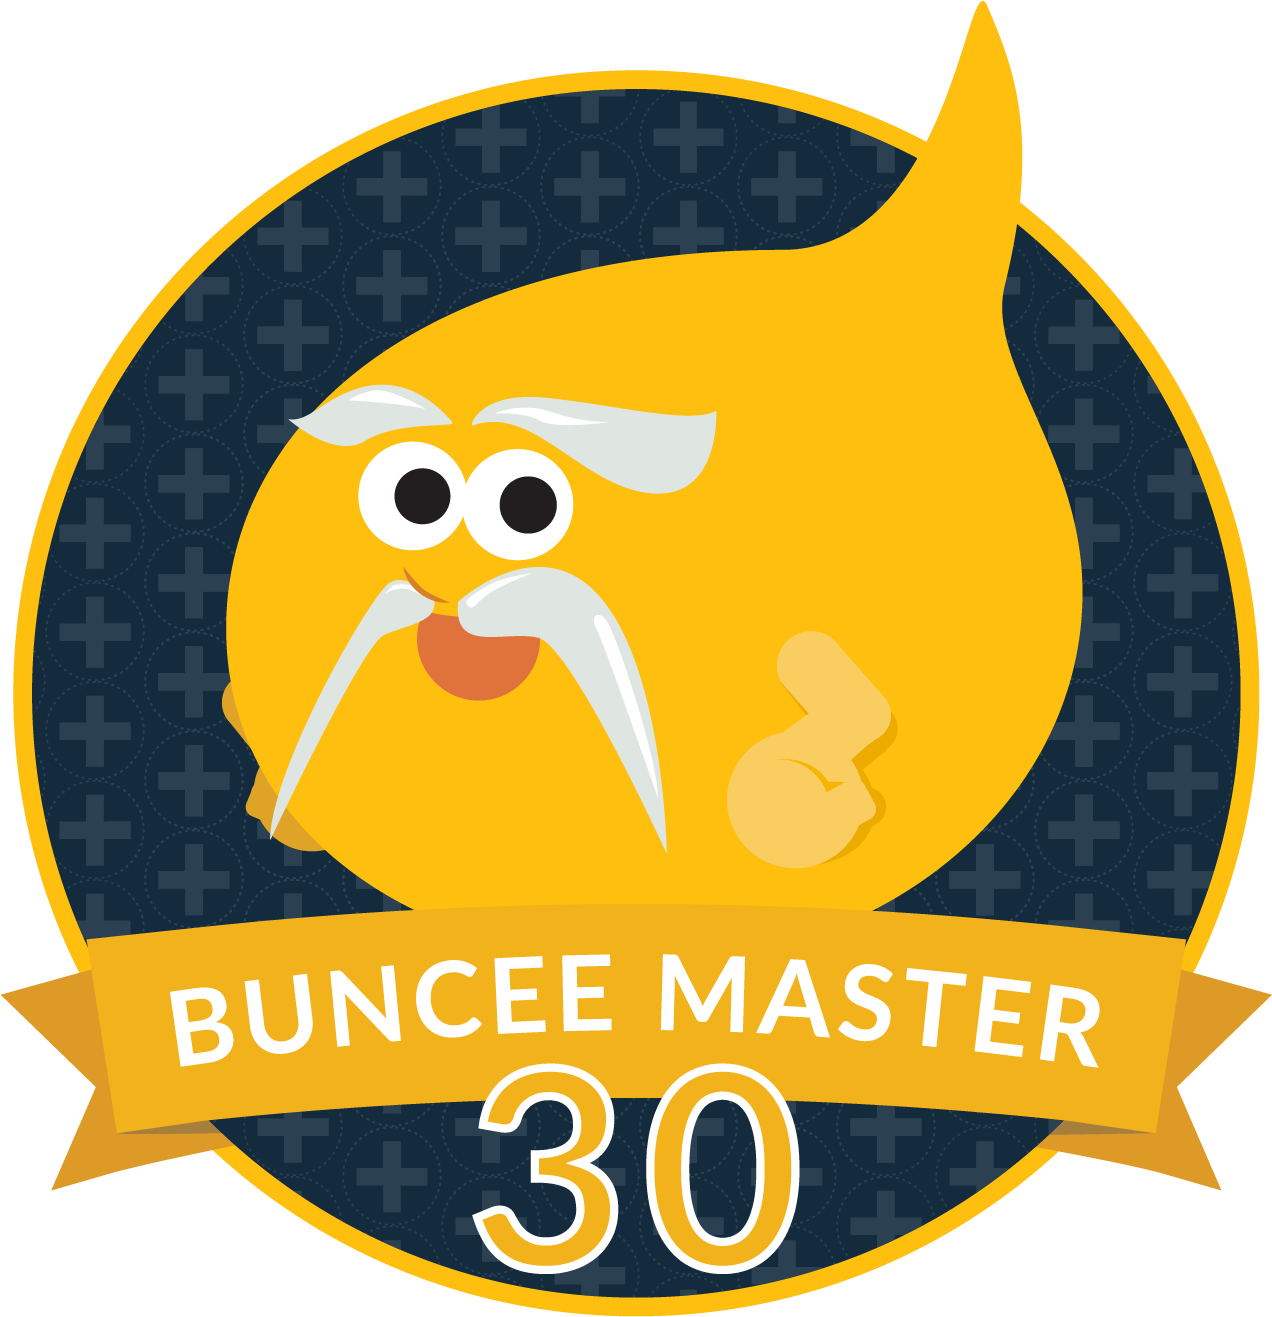 Buncee Master